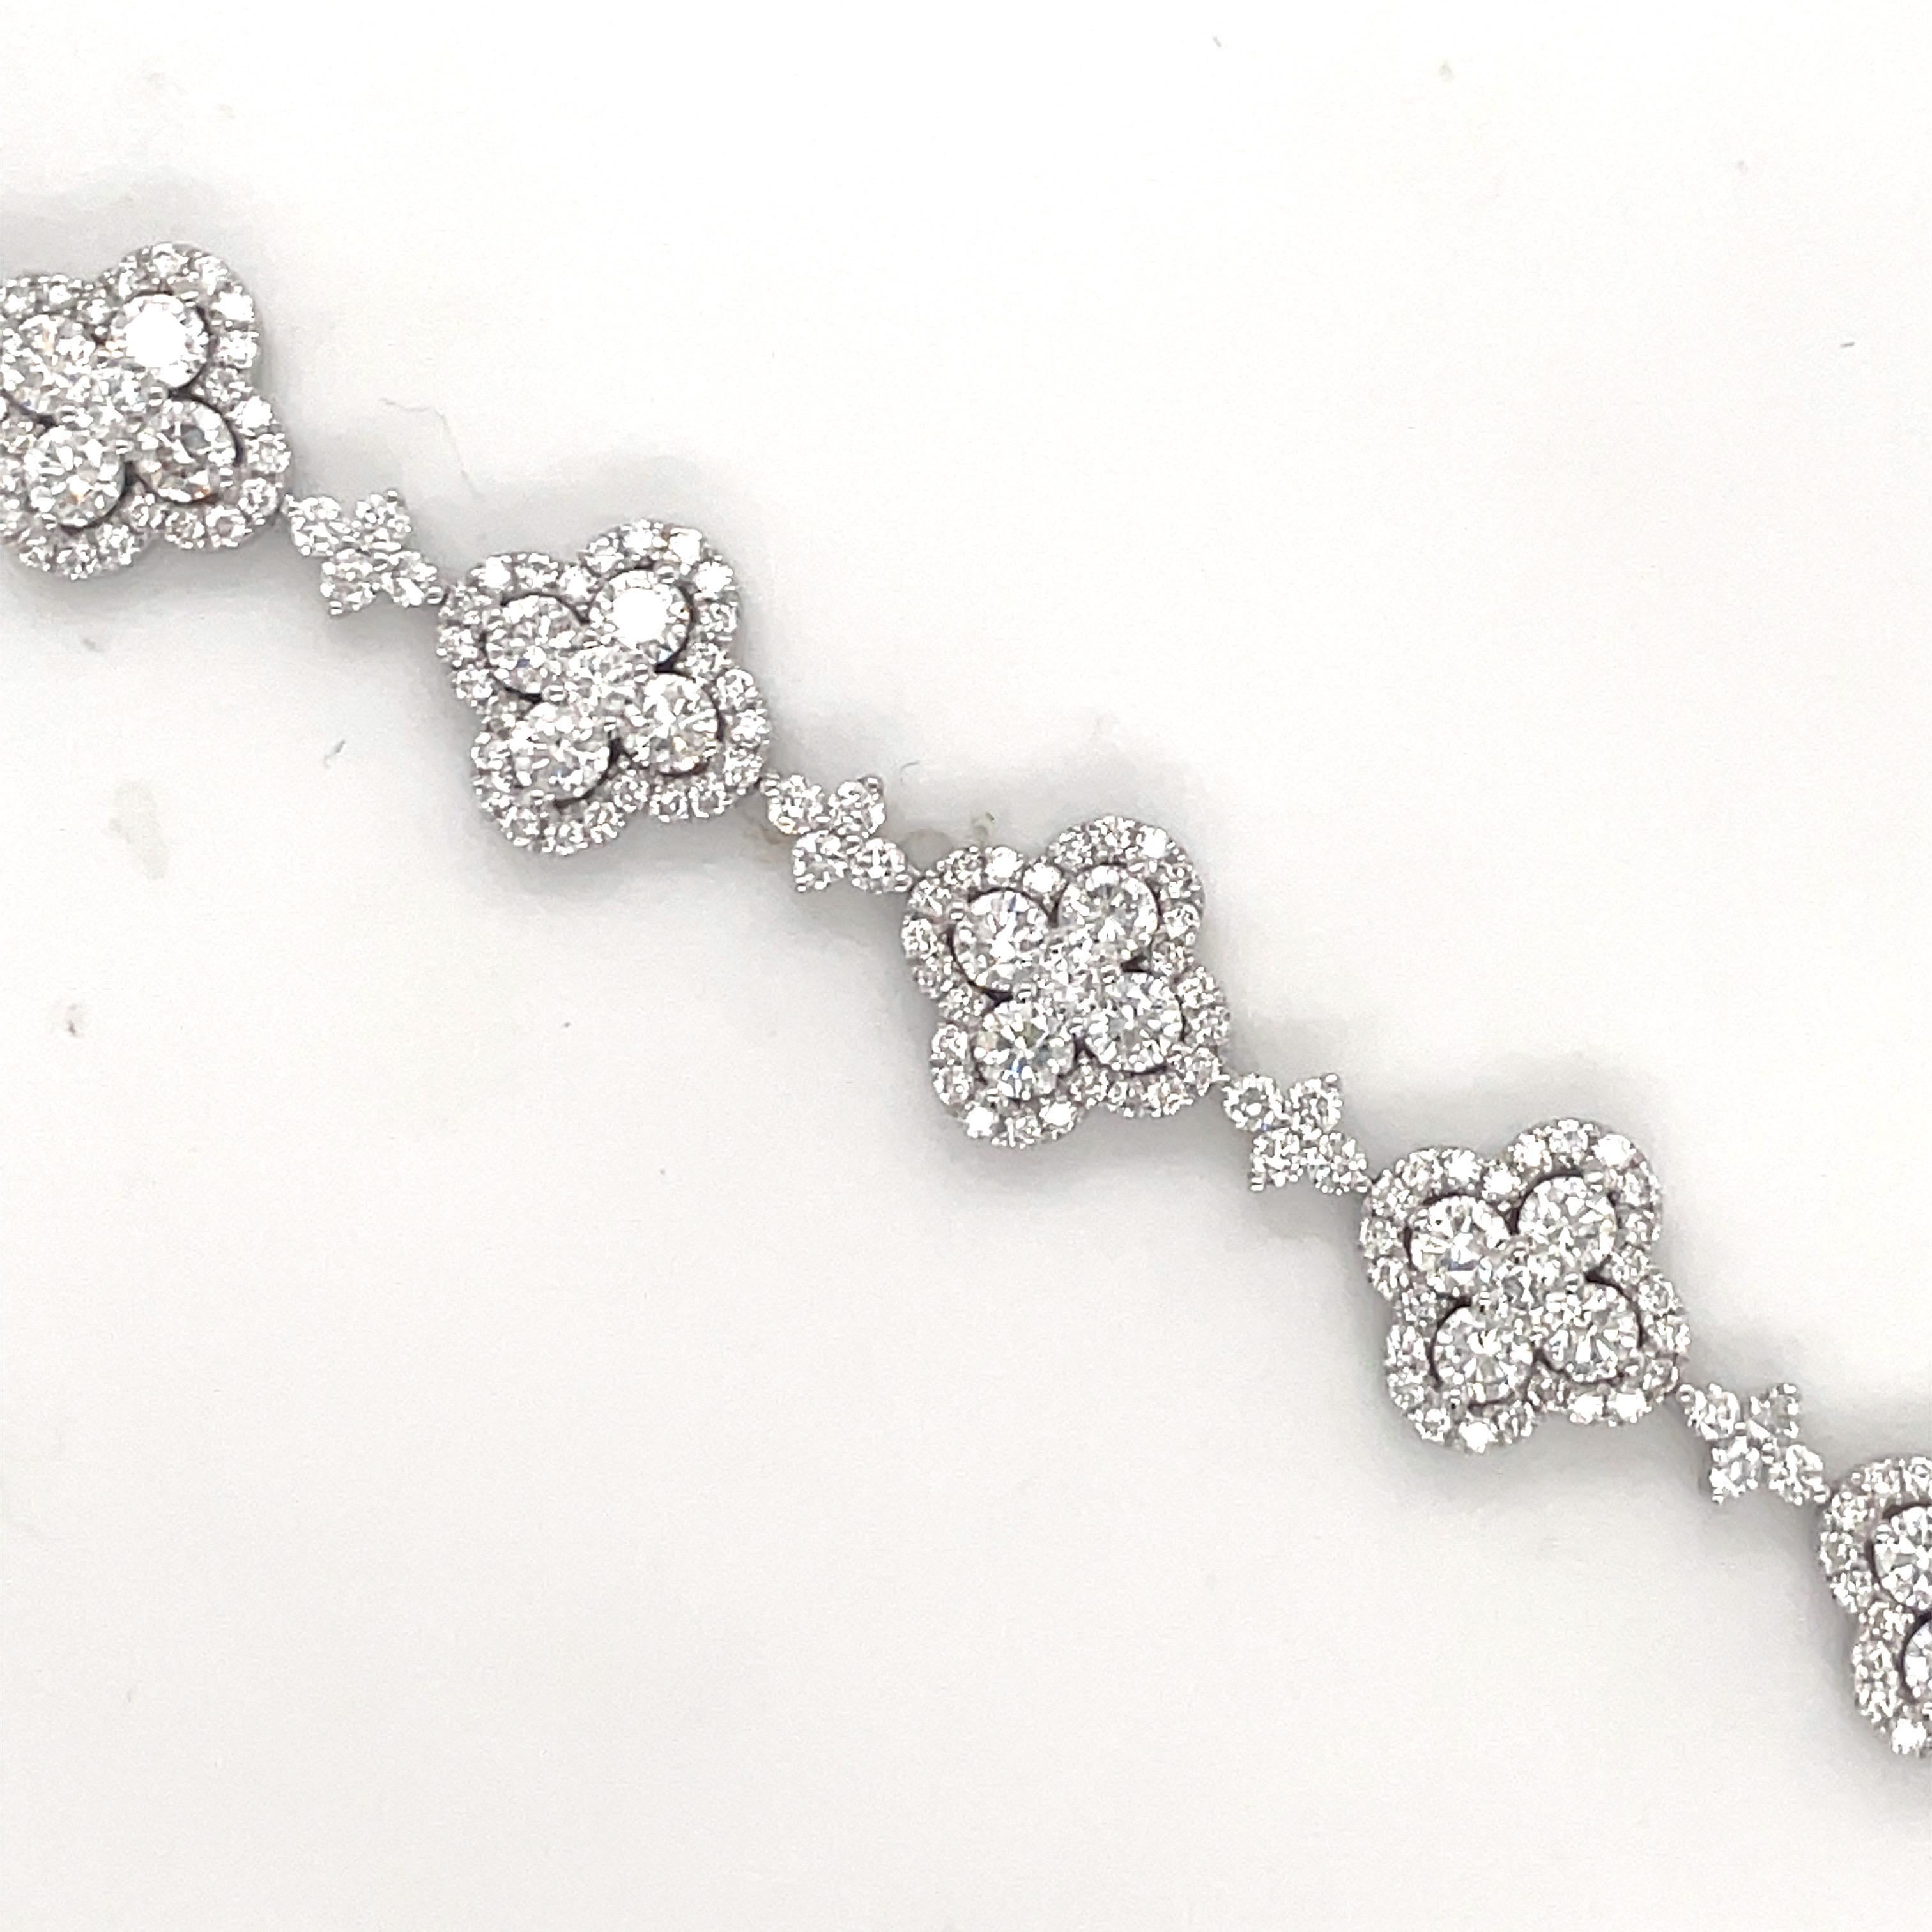 18 Karat White Gold Diamond Floral Tennis Bracelet 6.55 Carats 15 Grams For Sale 1